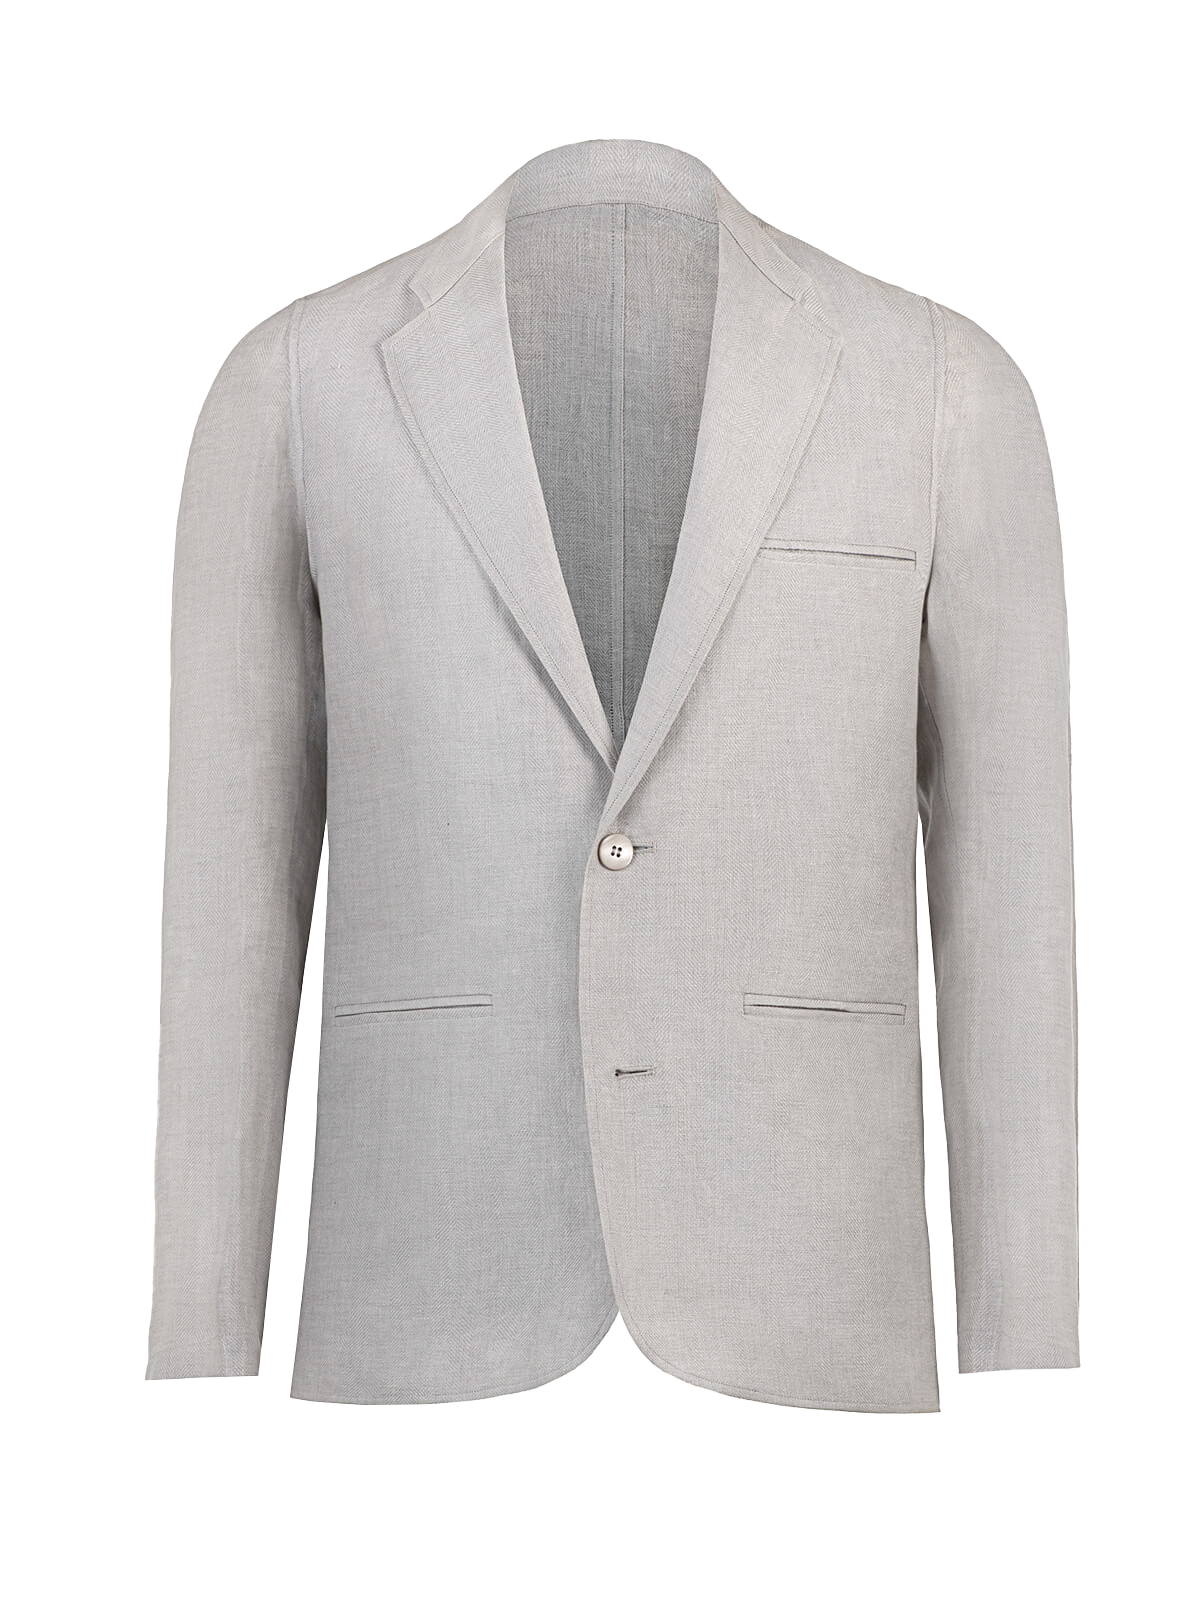 Giacca Sud Man 100% Capri light fgrey linen jacket front